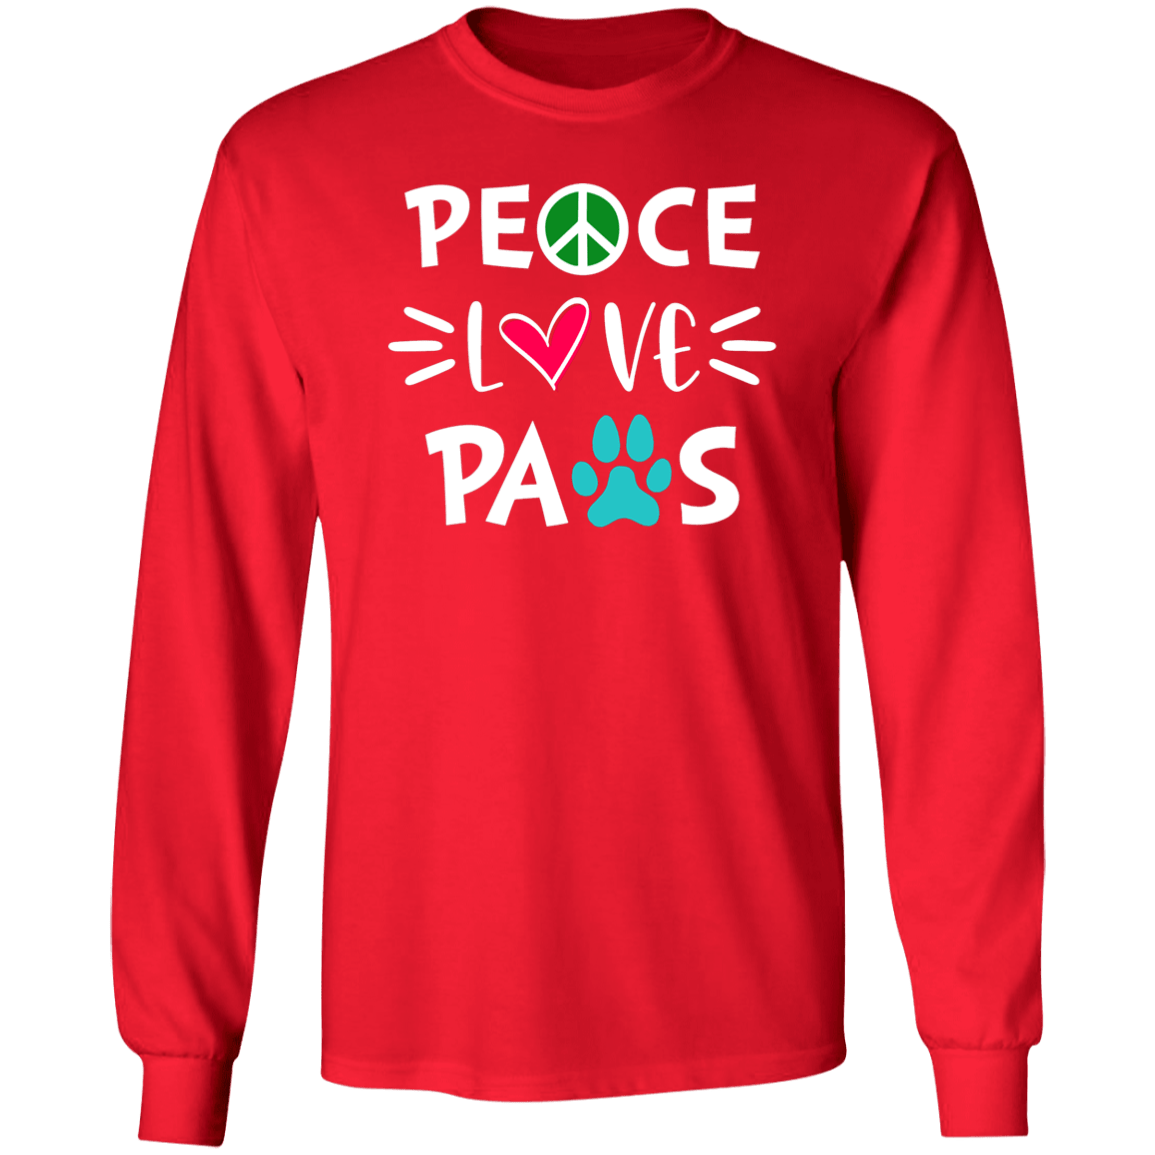 Peace Love Paws - Long Sleeve T Shirt.